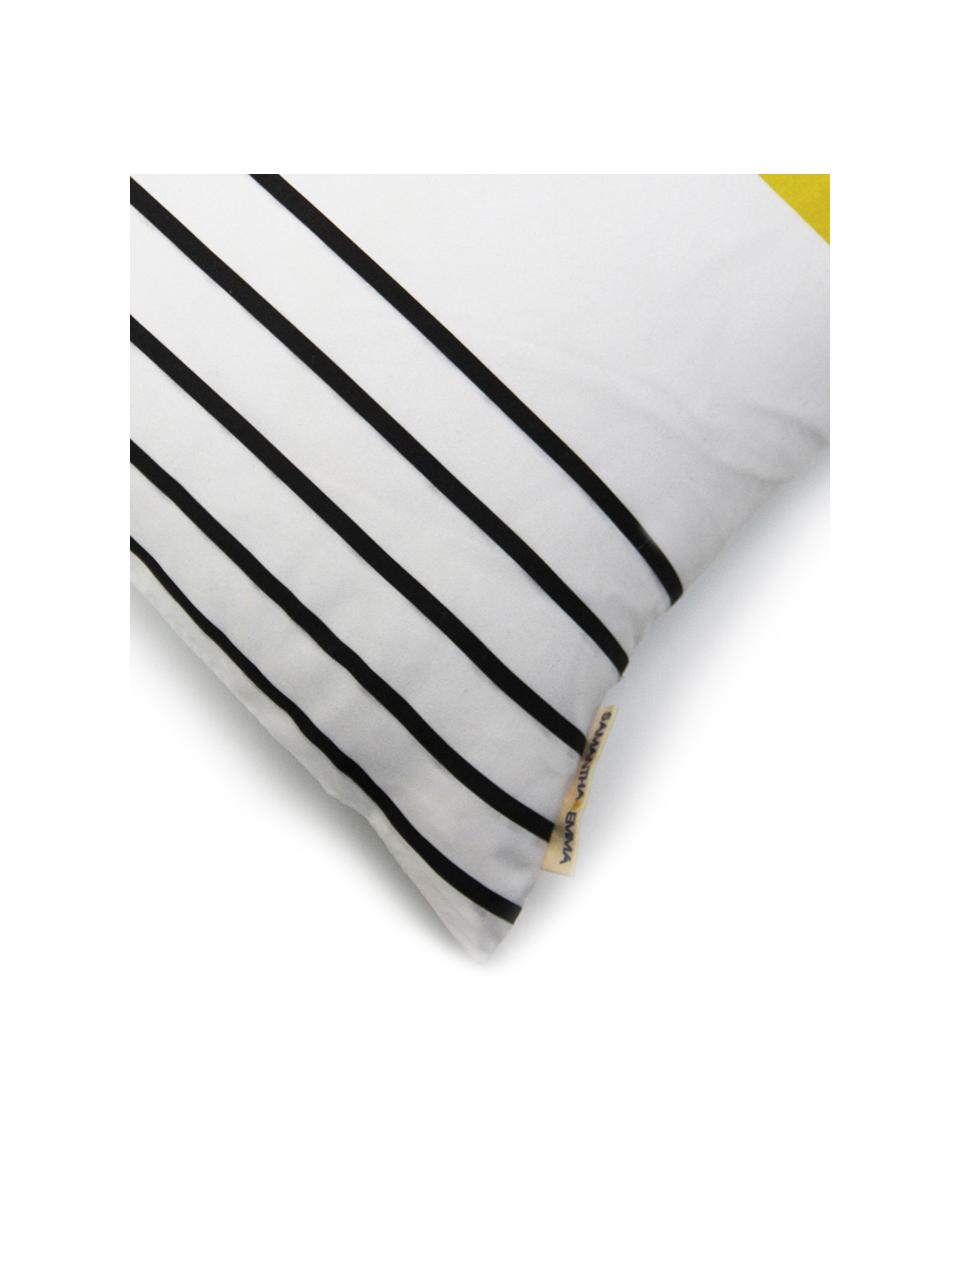 Kussenhoes Magdalena, Polyester, Wit, geel, zwart, 30 x 50 cm